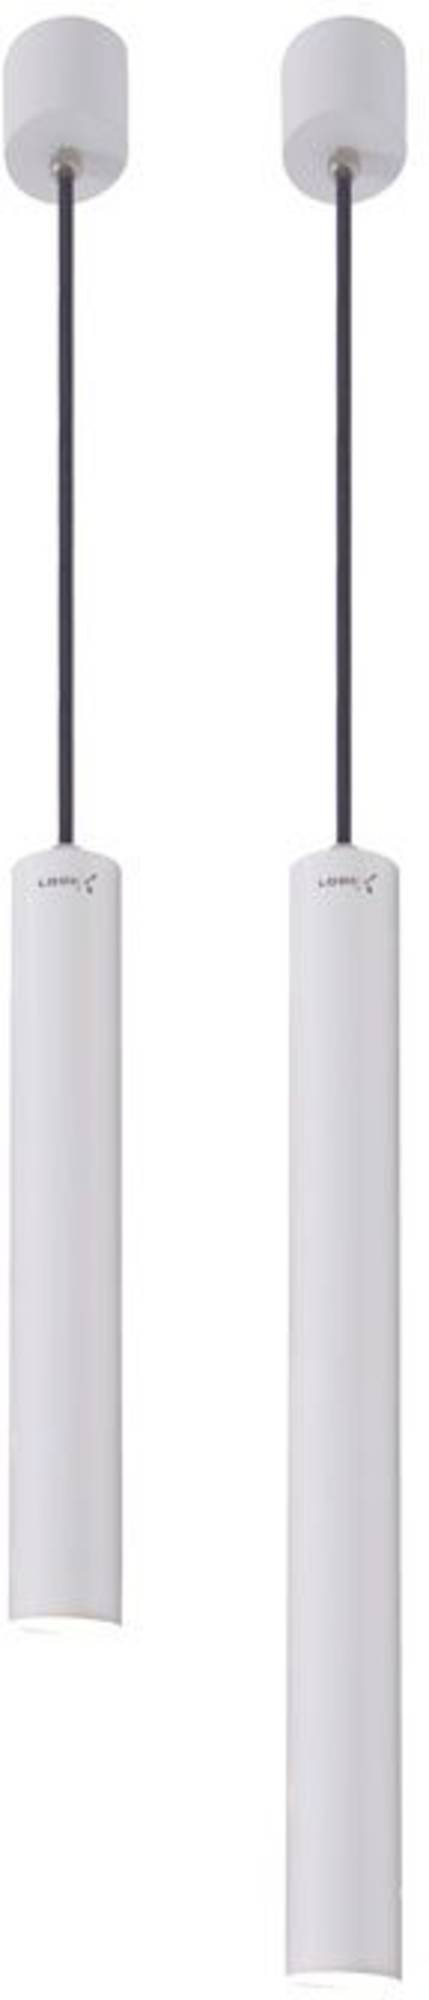 Looox Light Collection 2 badkamer hanglampen 25 en 40 cm mat wit